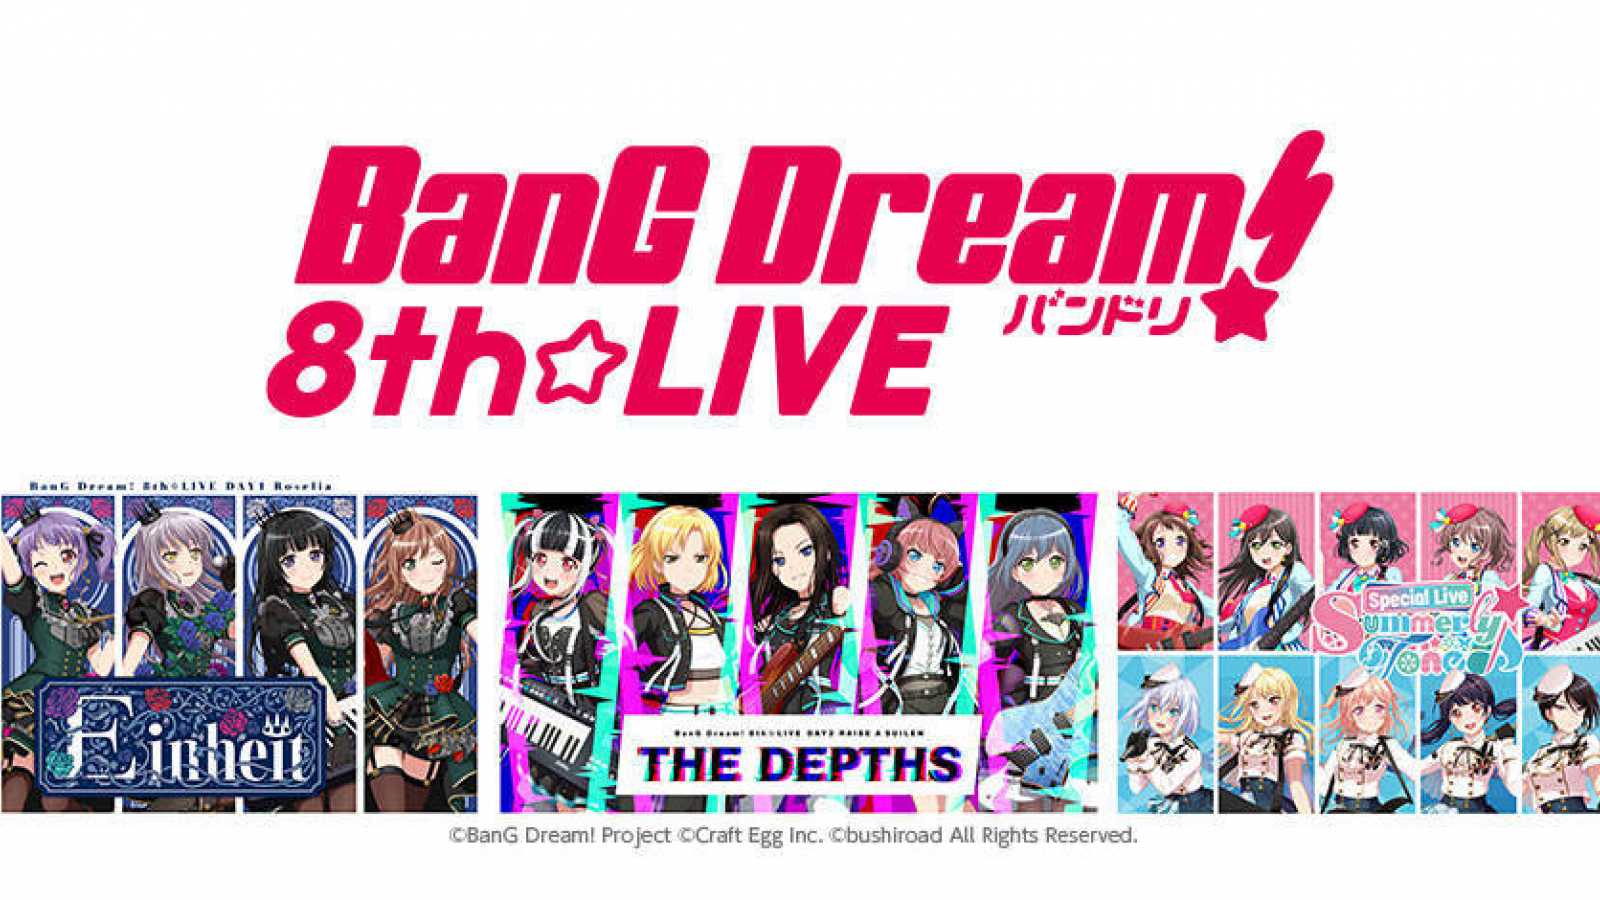 "BanG Dream! 8th☆LIVE" Summer Outdoors 3DAYS será transmitido mundialmente © BanG Dream! Project ©Craft Egg Inc. ©bushiroad All Rights Reserved.